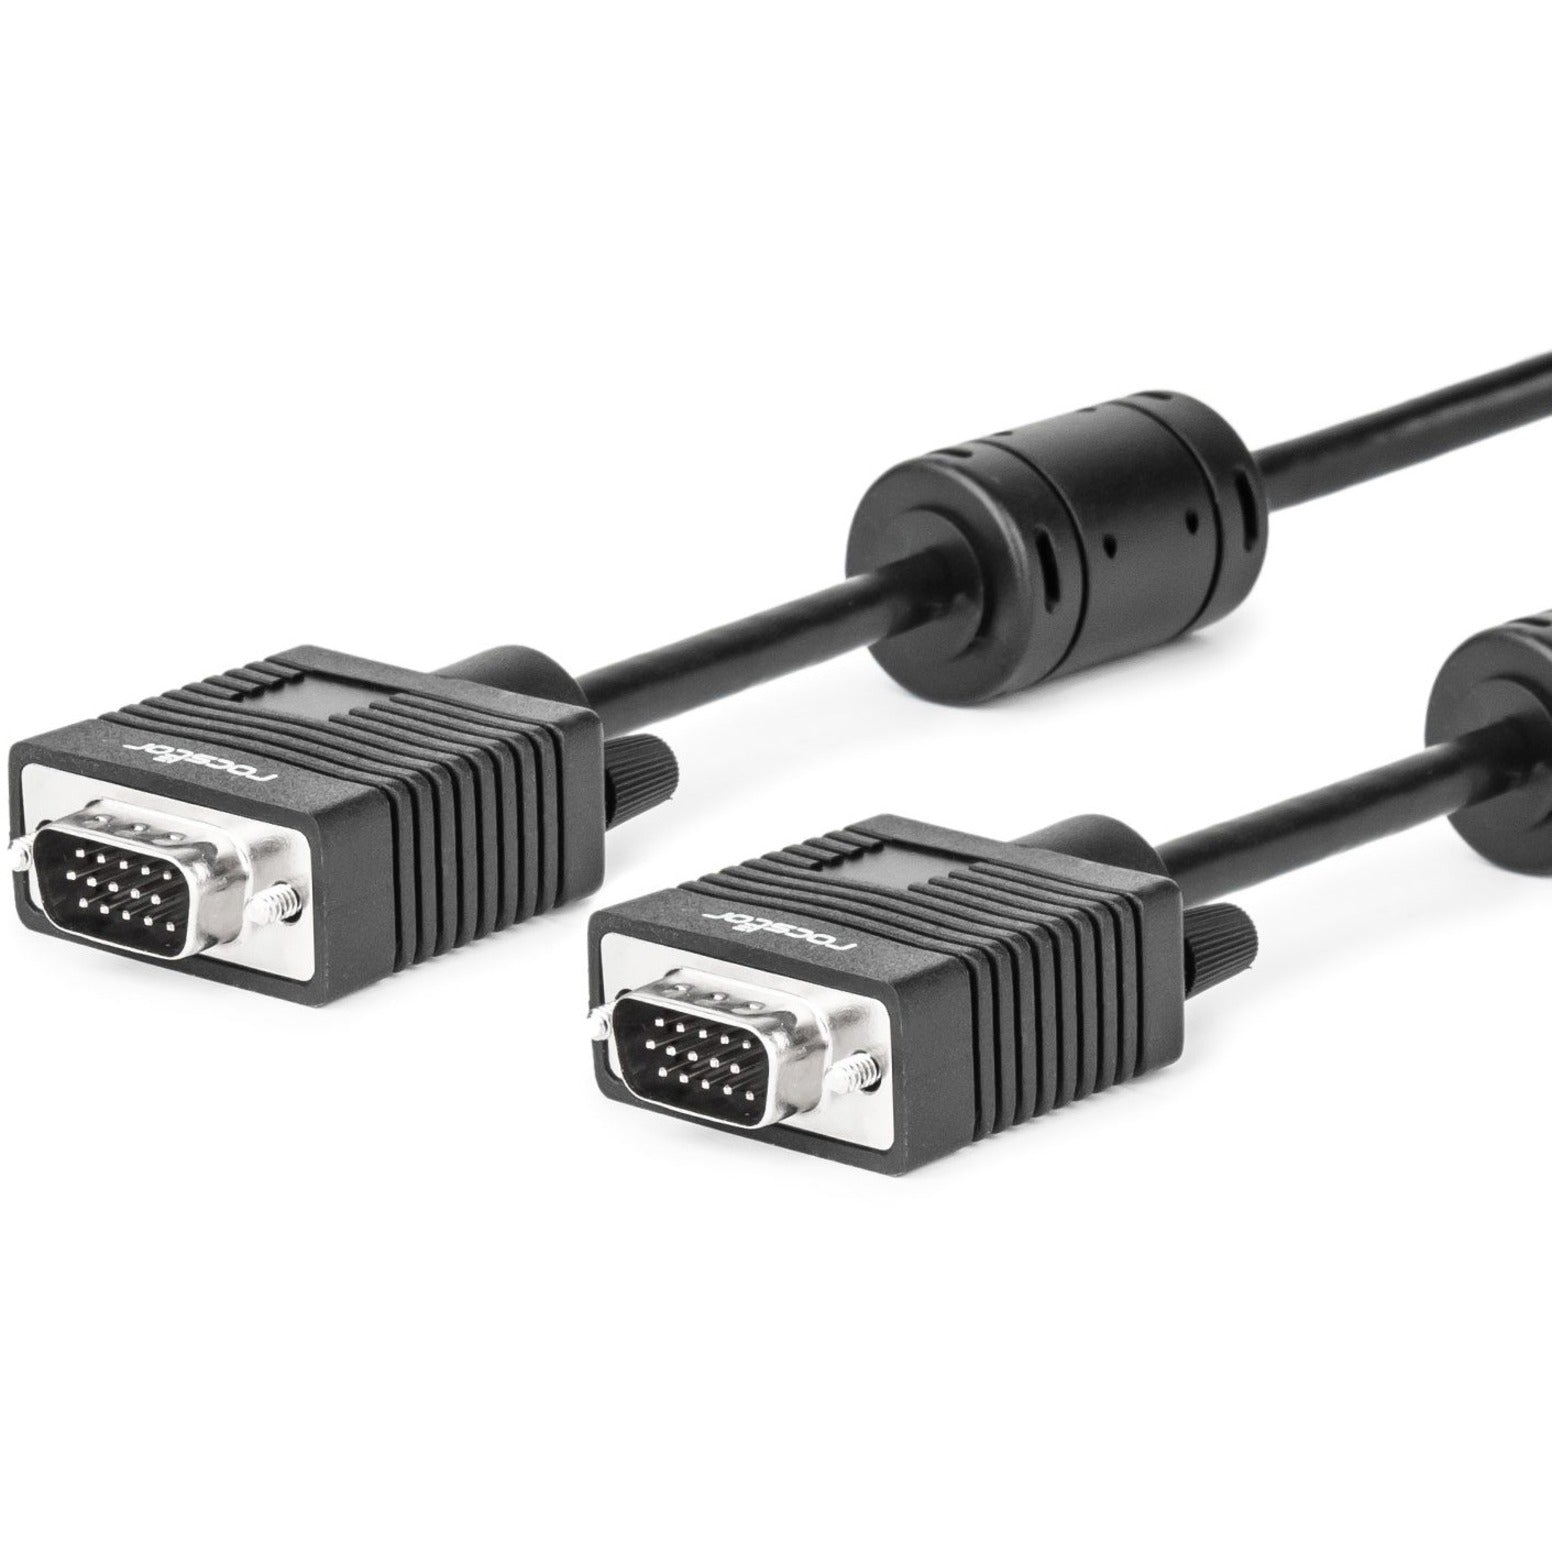 Rocstor Y10C138-B1 Premium High-Resolution SVGA/VGA Monitor Cable, 6 ft, EMI/RF Protection, Molded